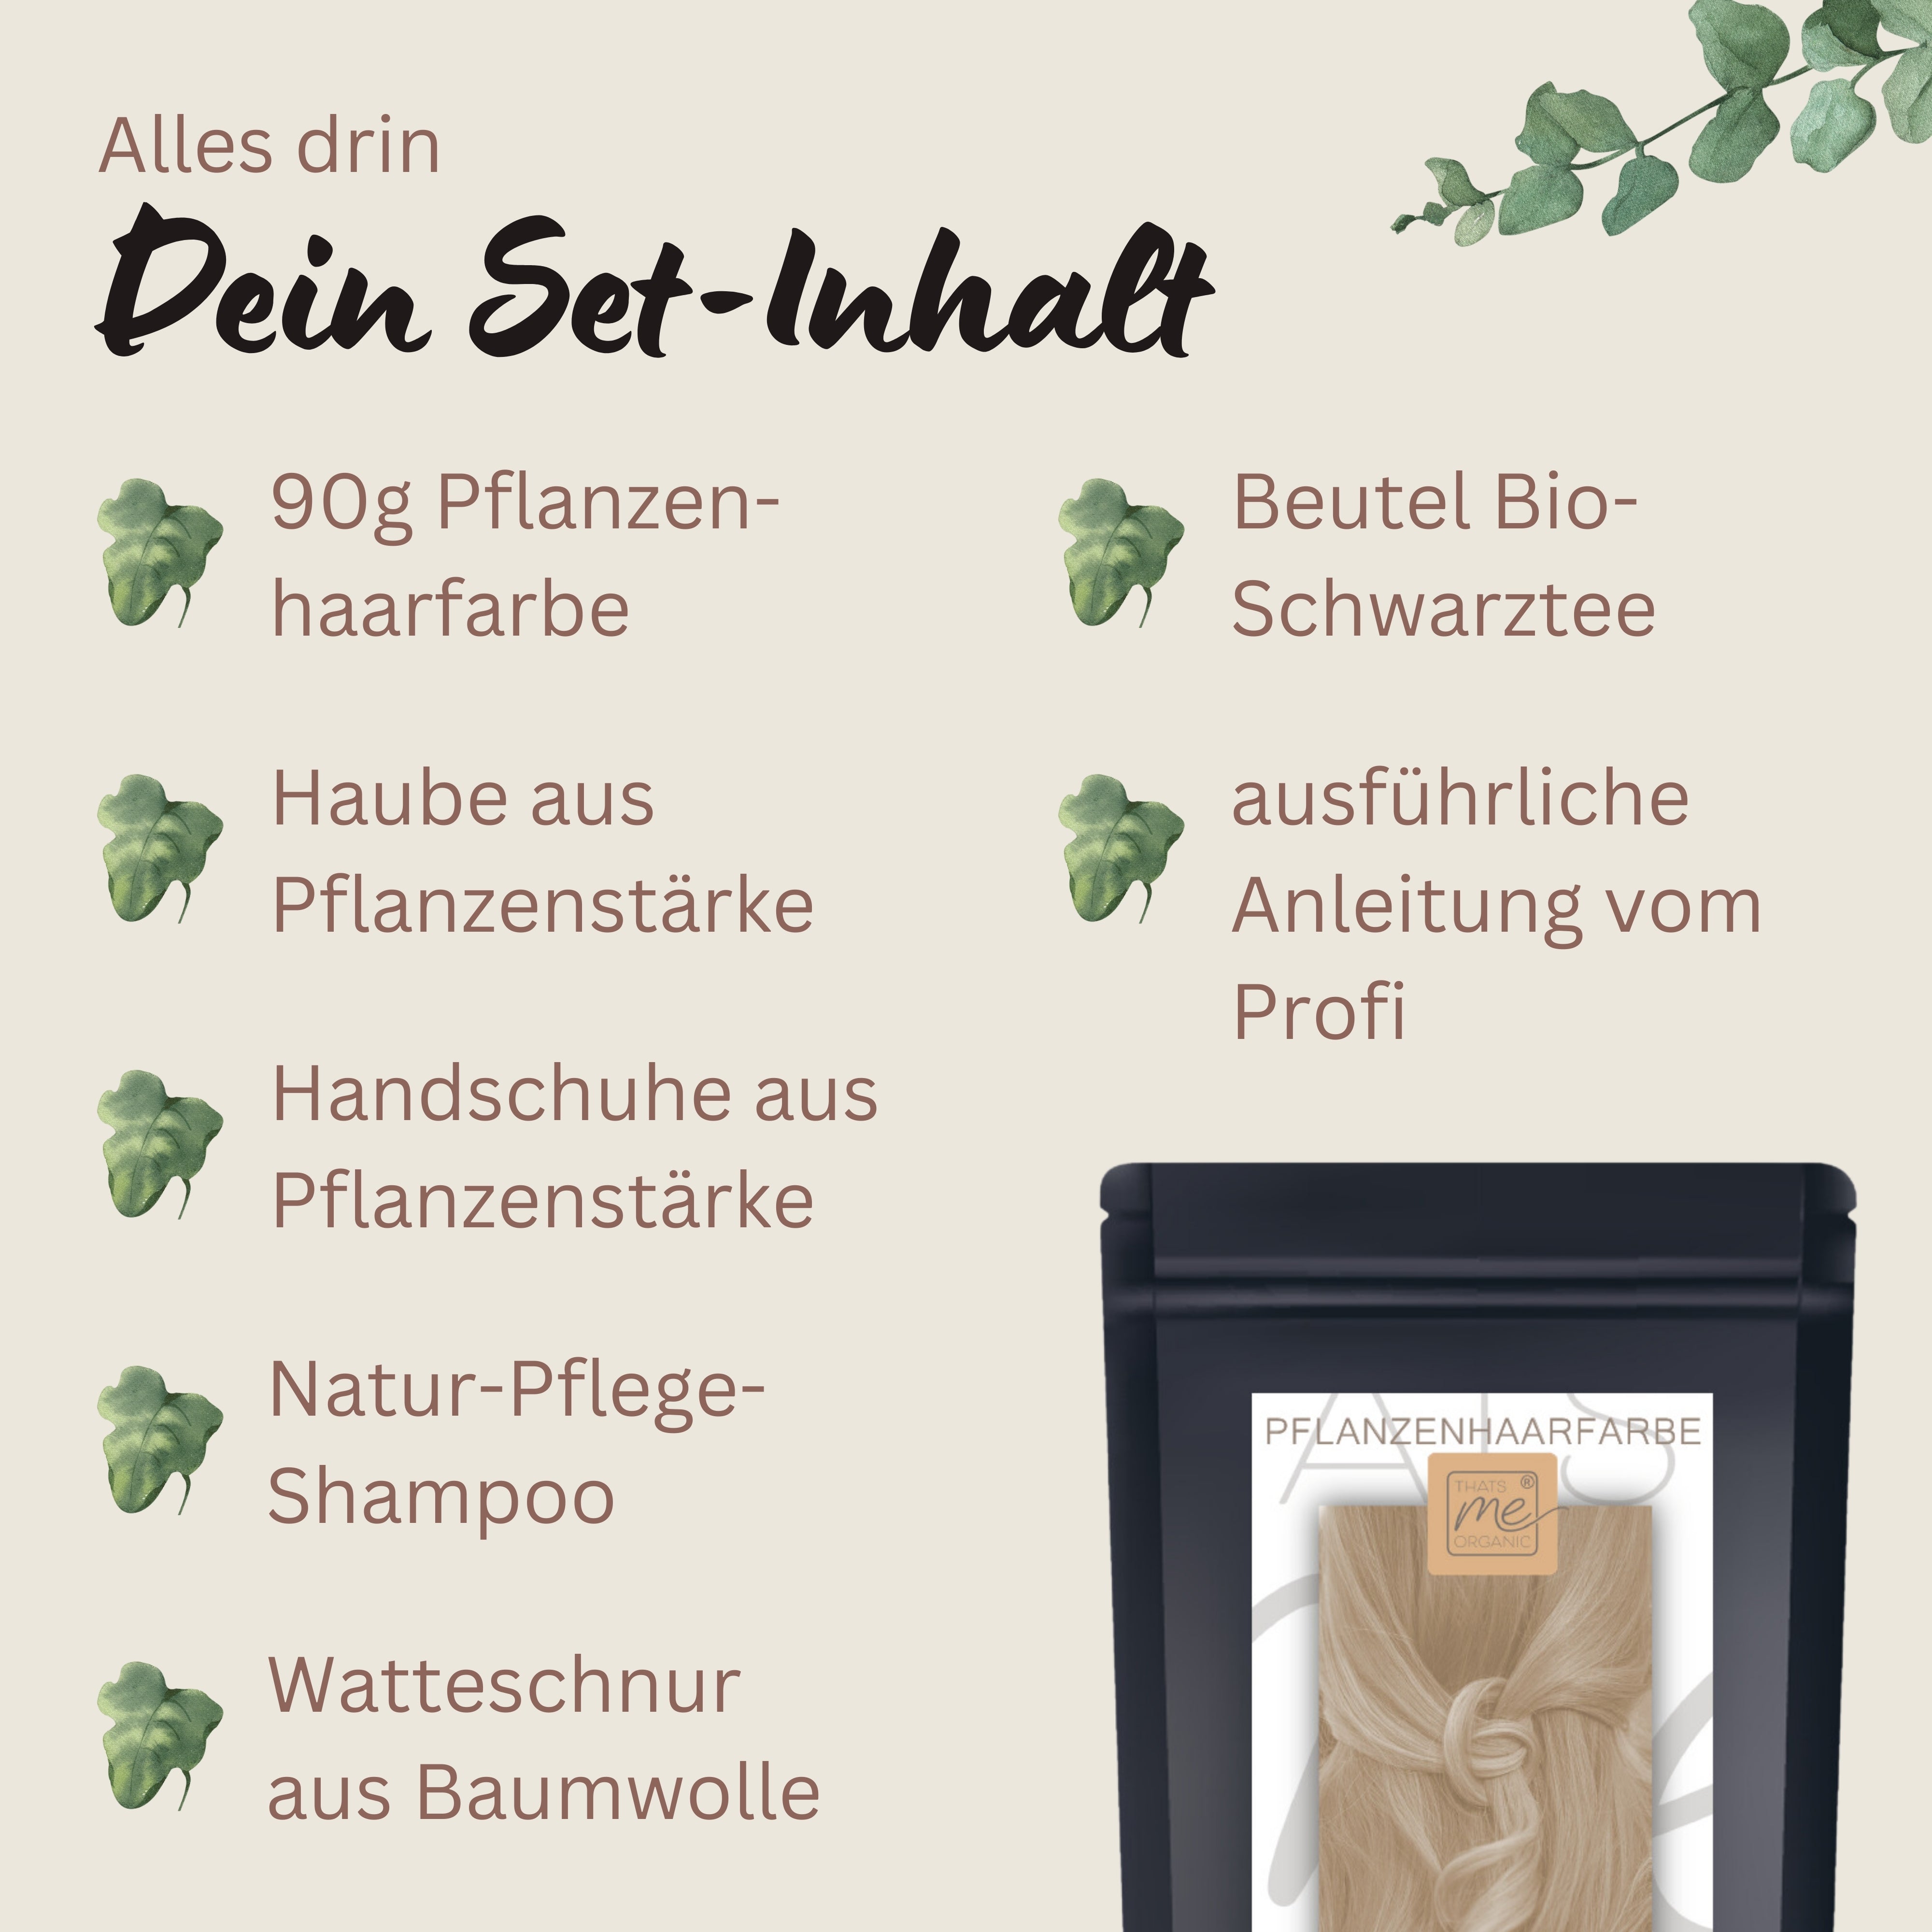 Profi-Pflanzenhaarfarbe SET kühle farblose Volumen-Glanz-Haarpackung "cool shiny hair pack"